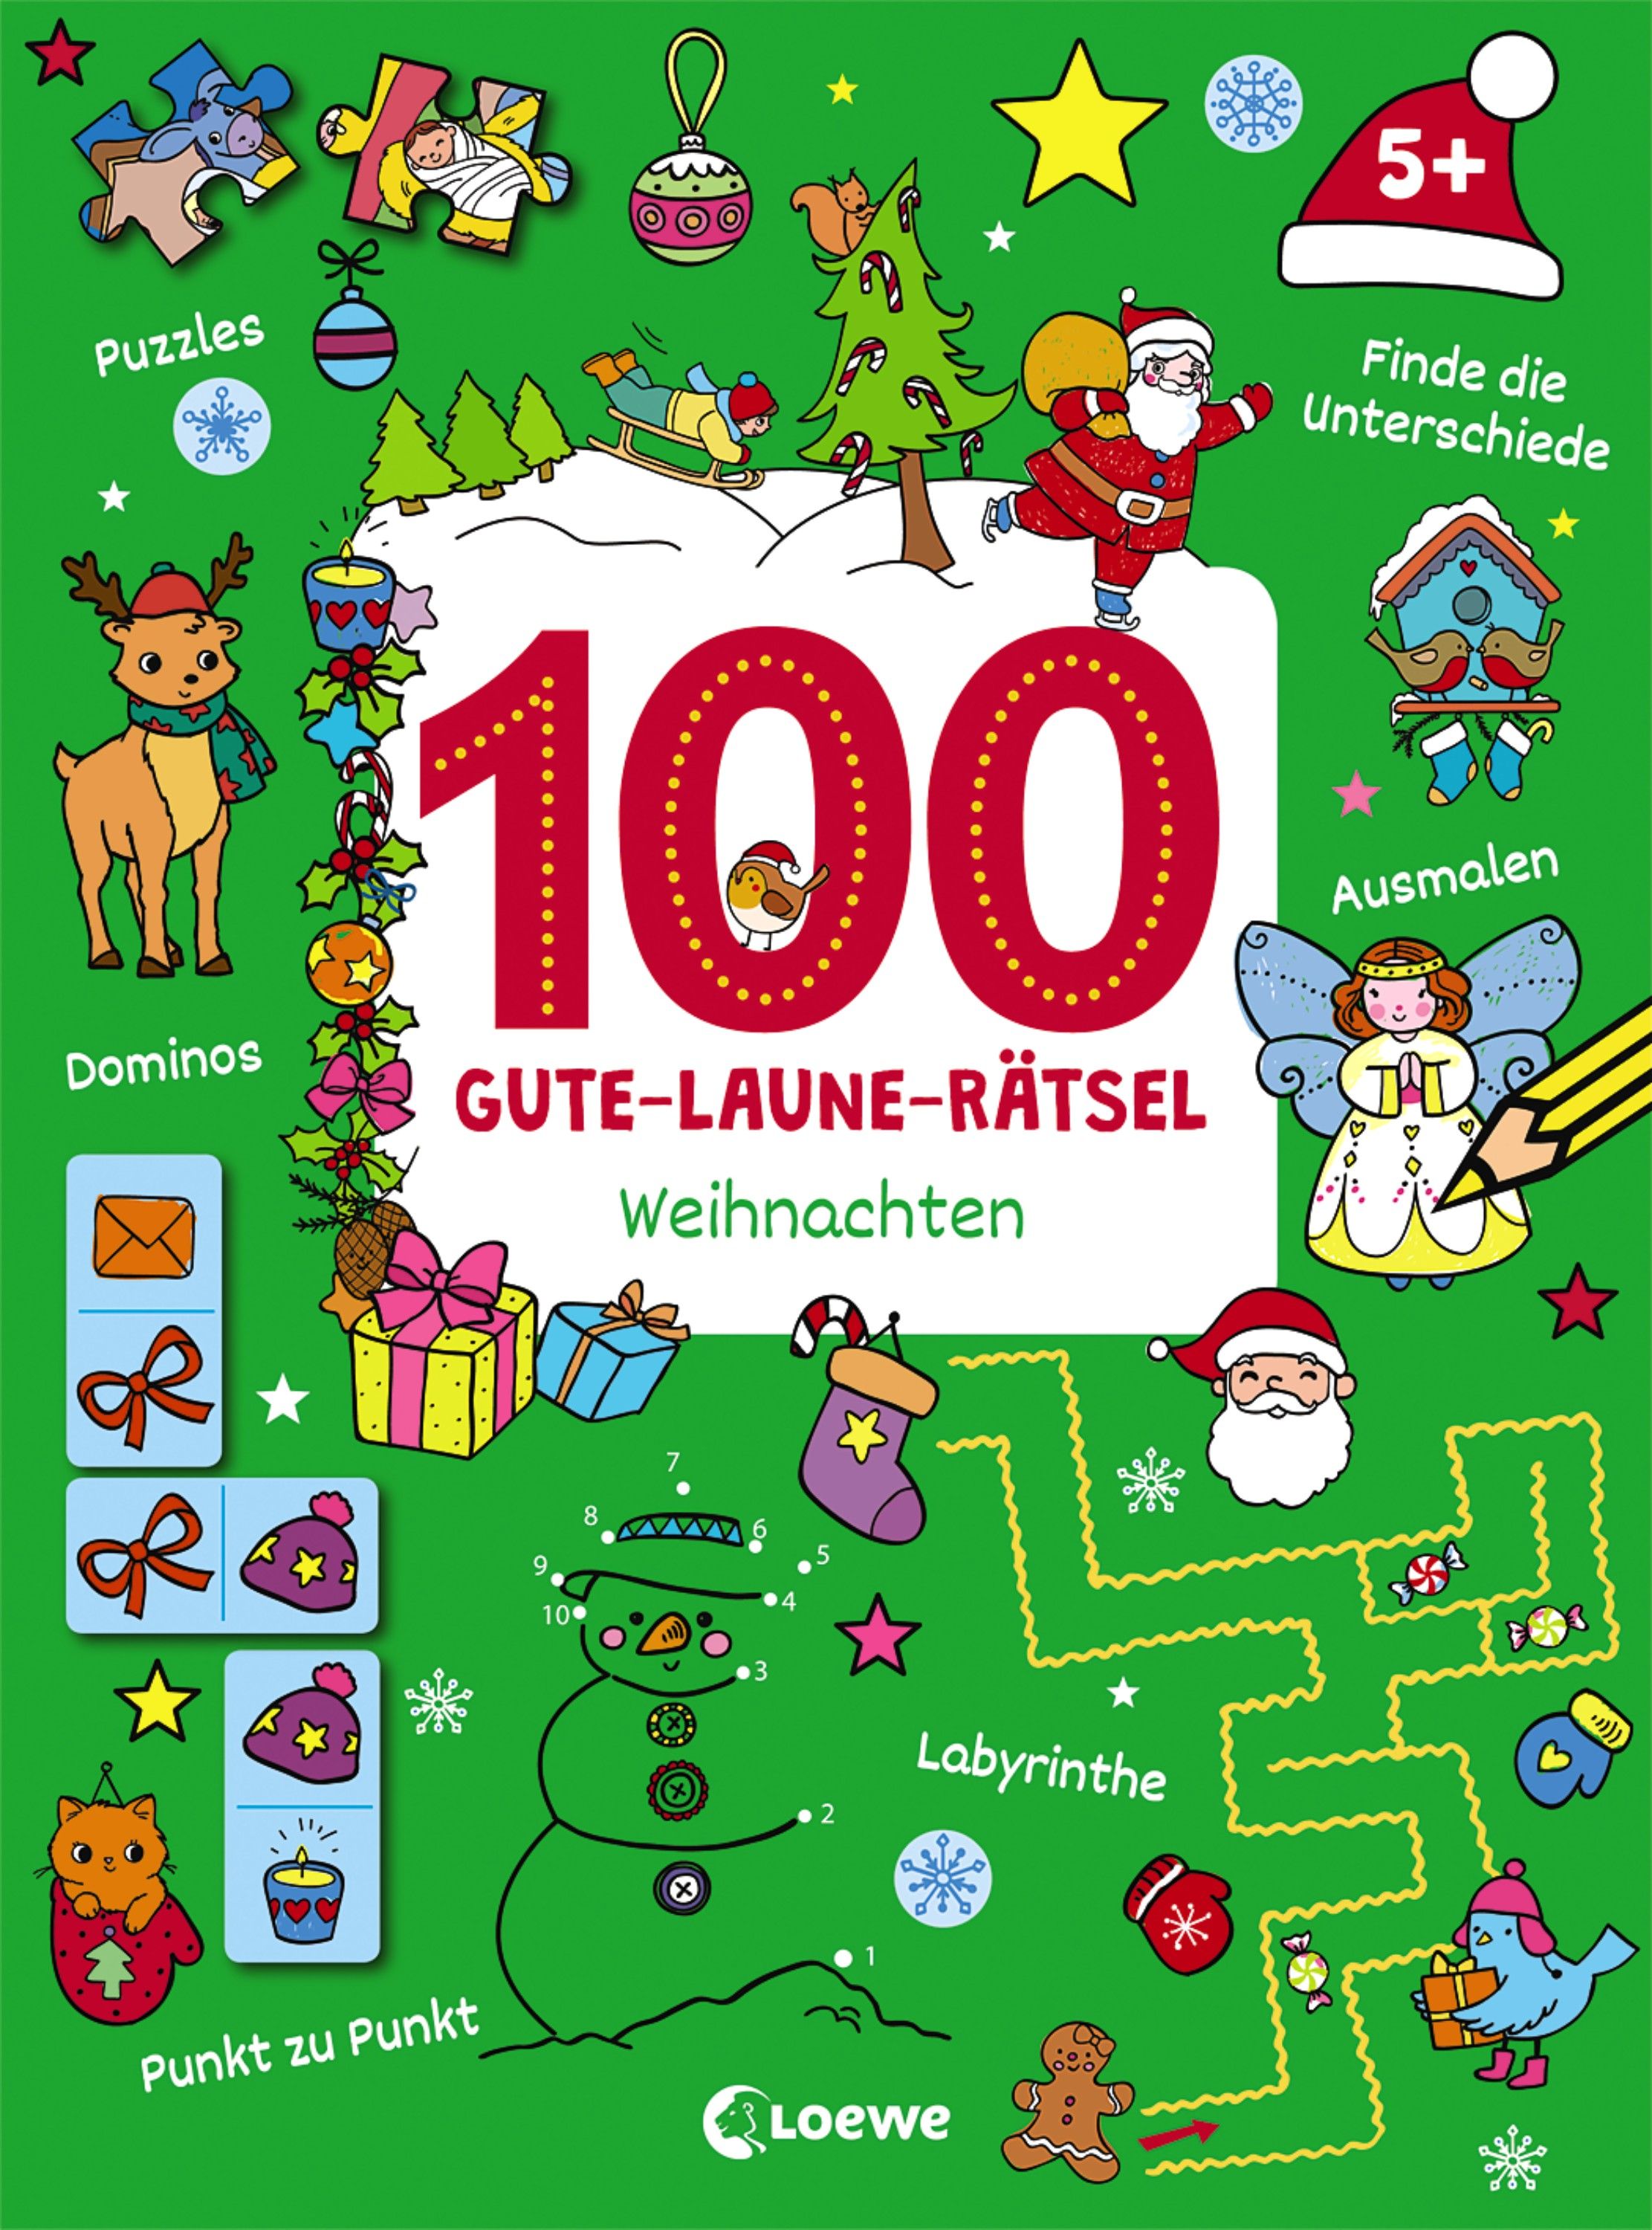 40++ 24 knifflige weihnachtsratsel ratselspa fur kinder ab 8 jahre german edition info